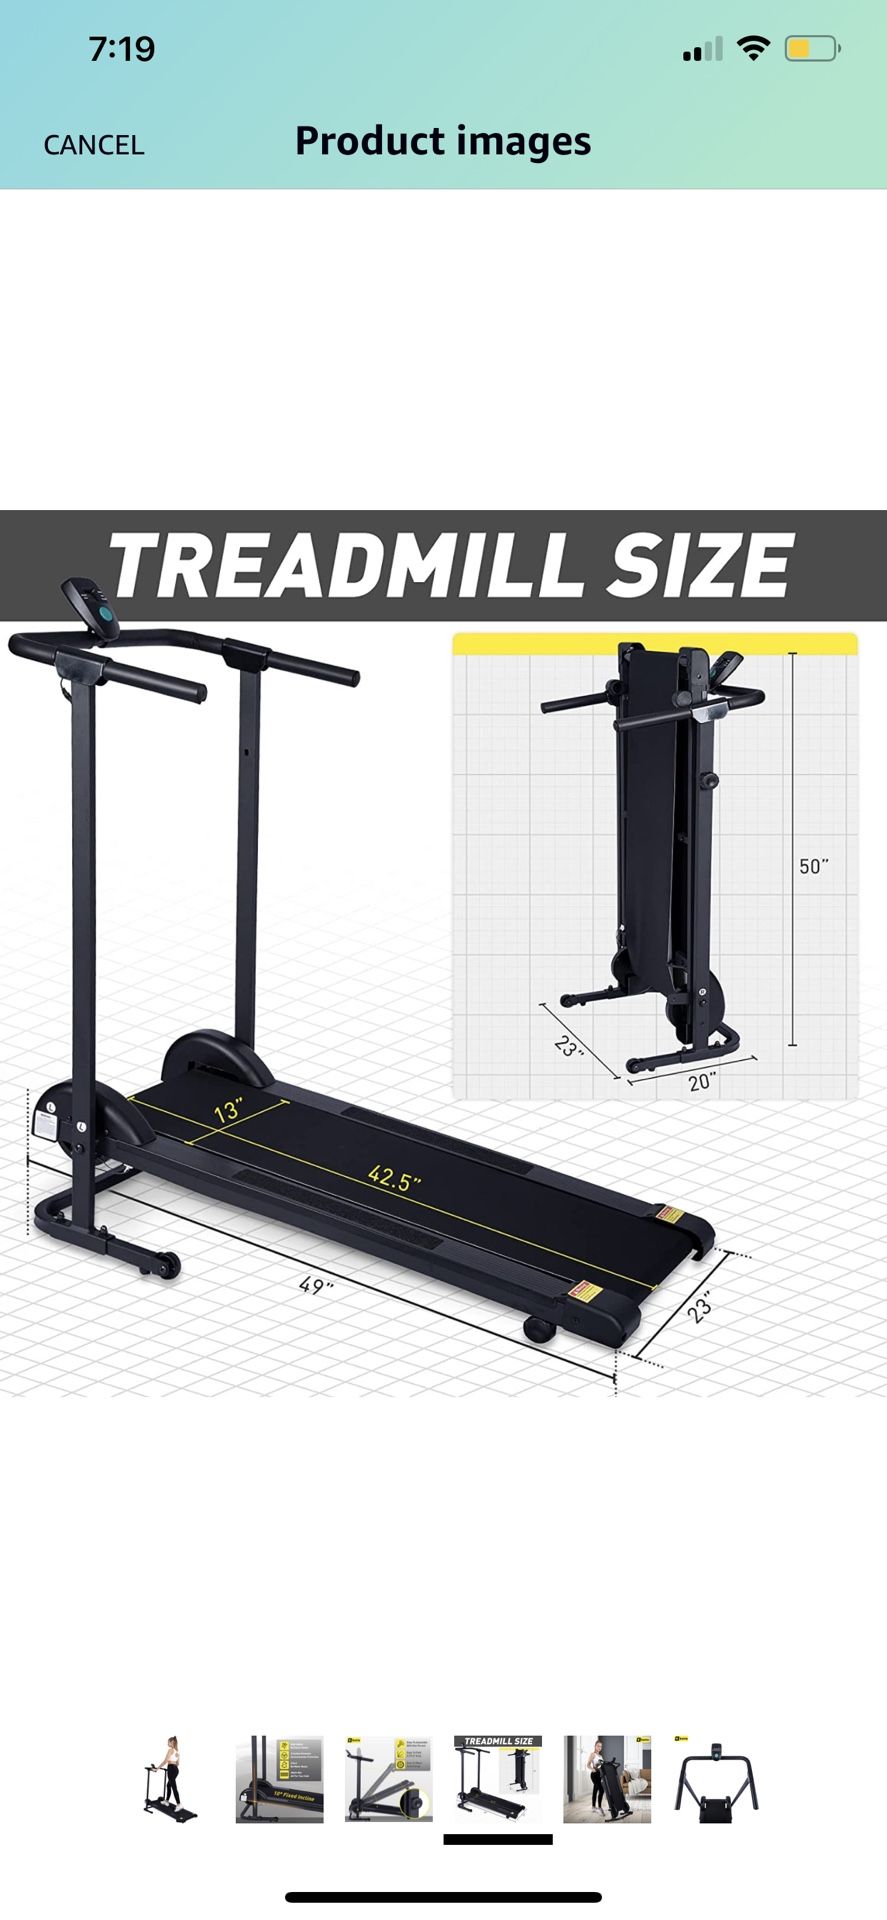 New manual treadmill